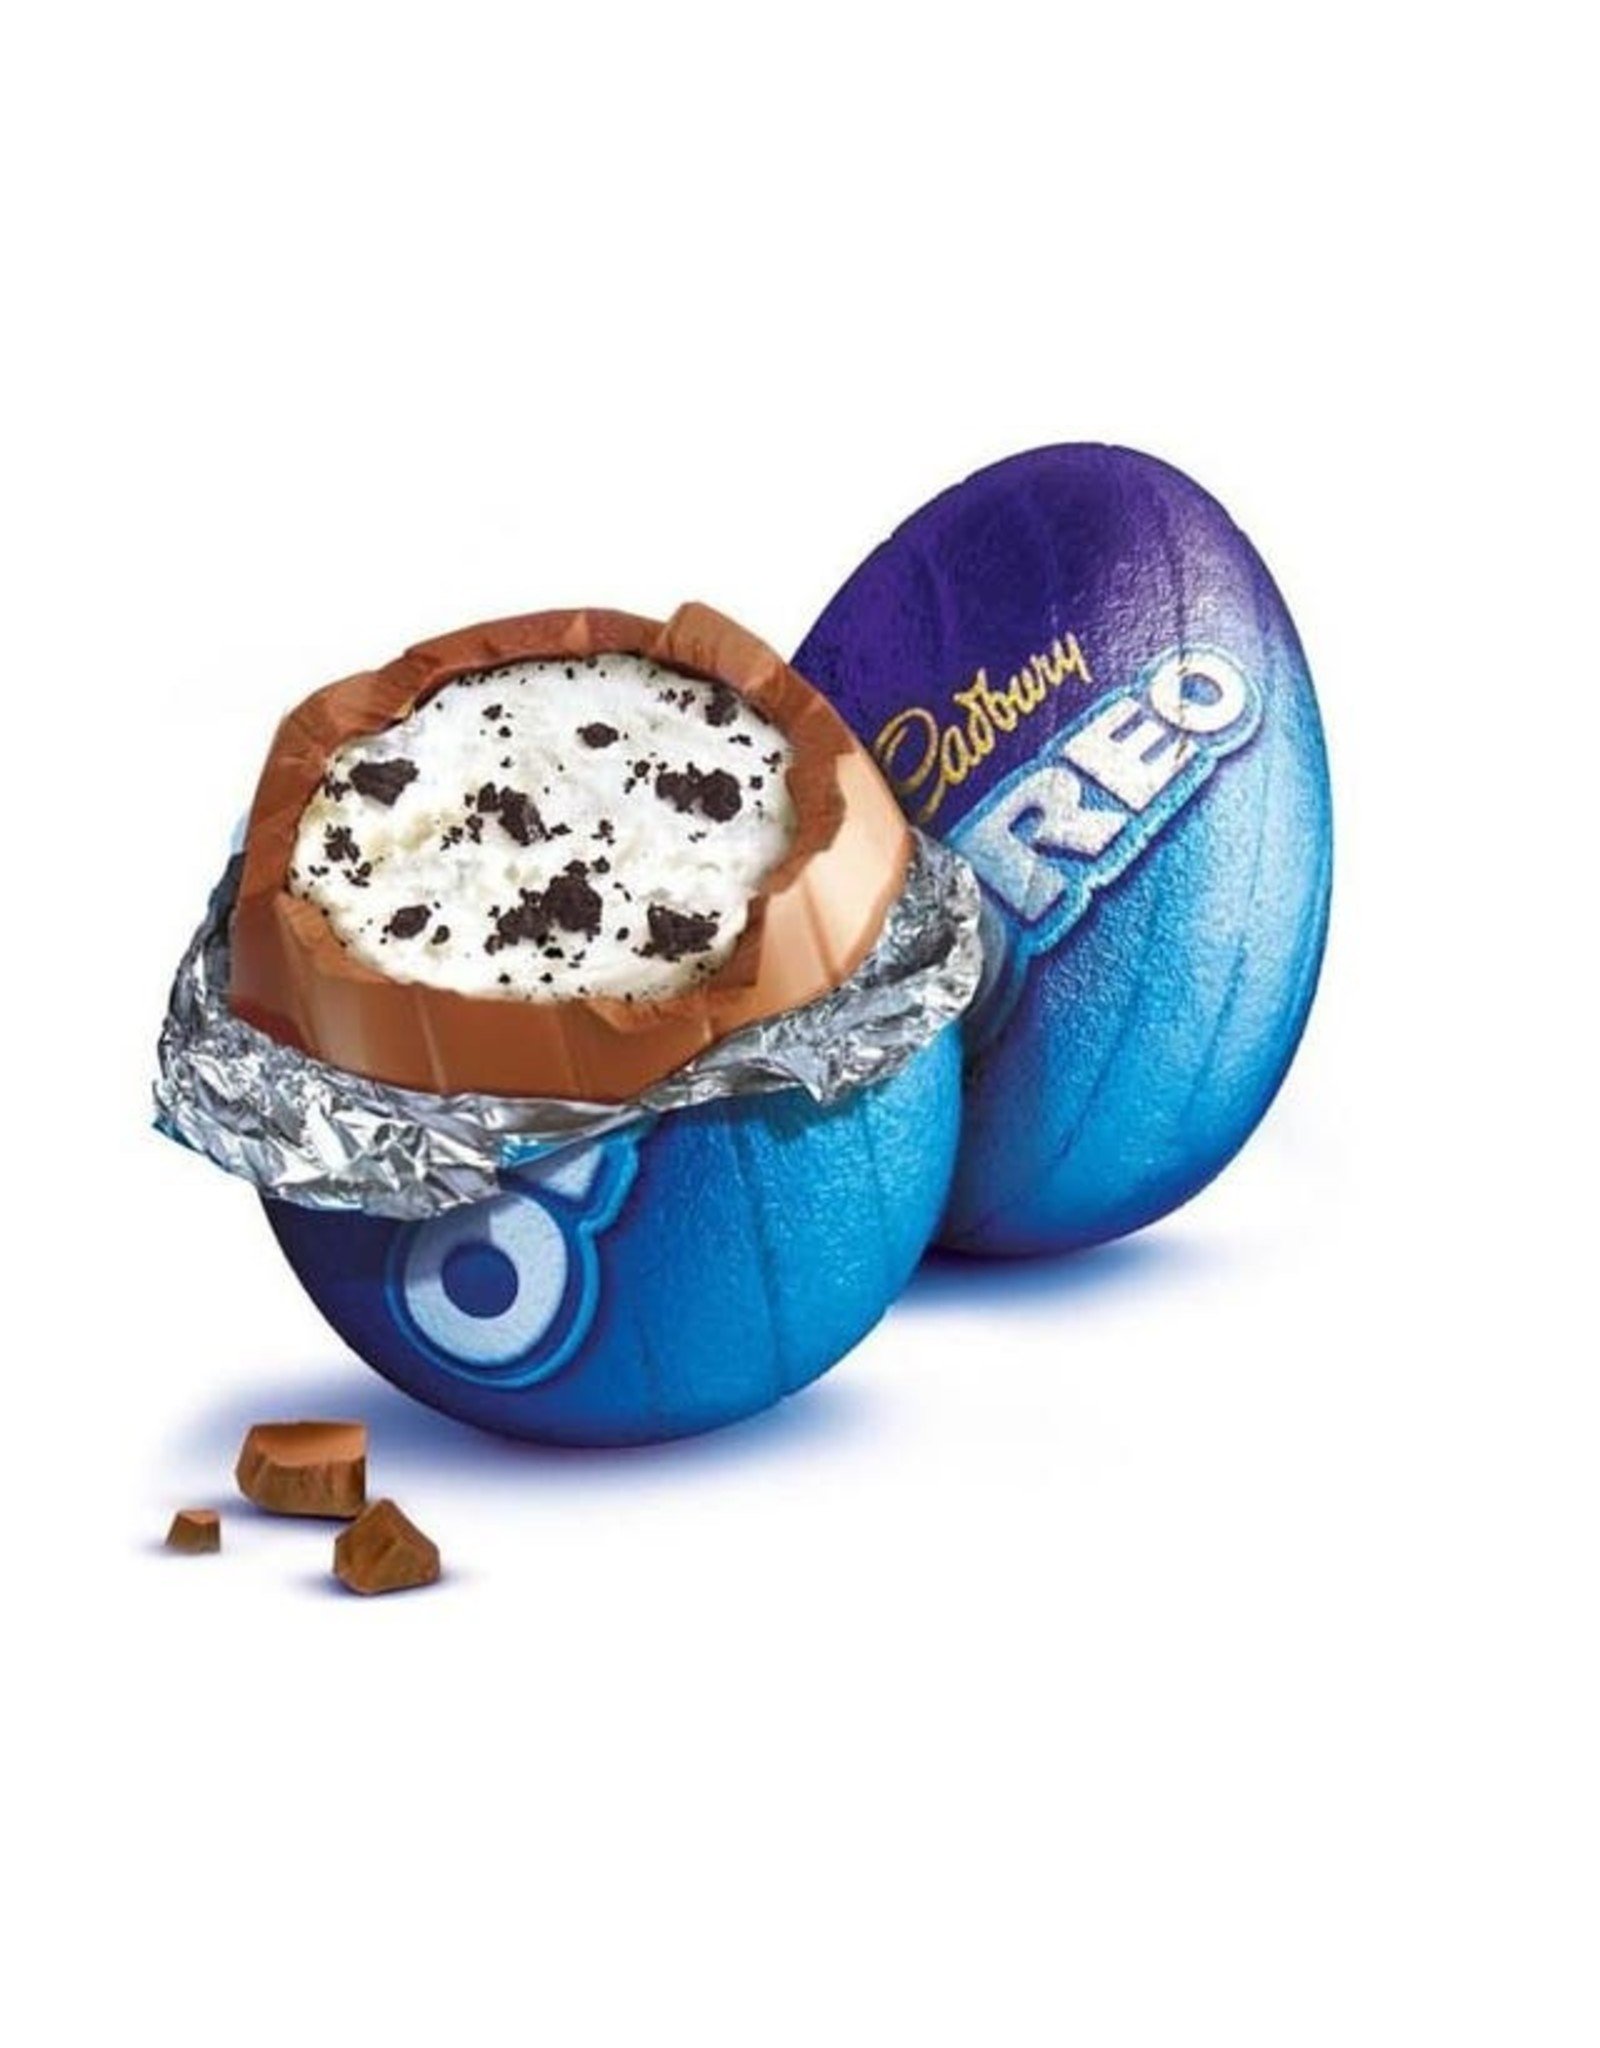 Cadbury Oreo Egg (British)